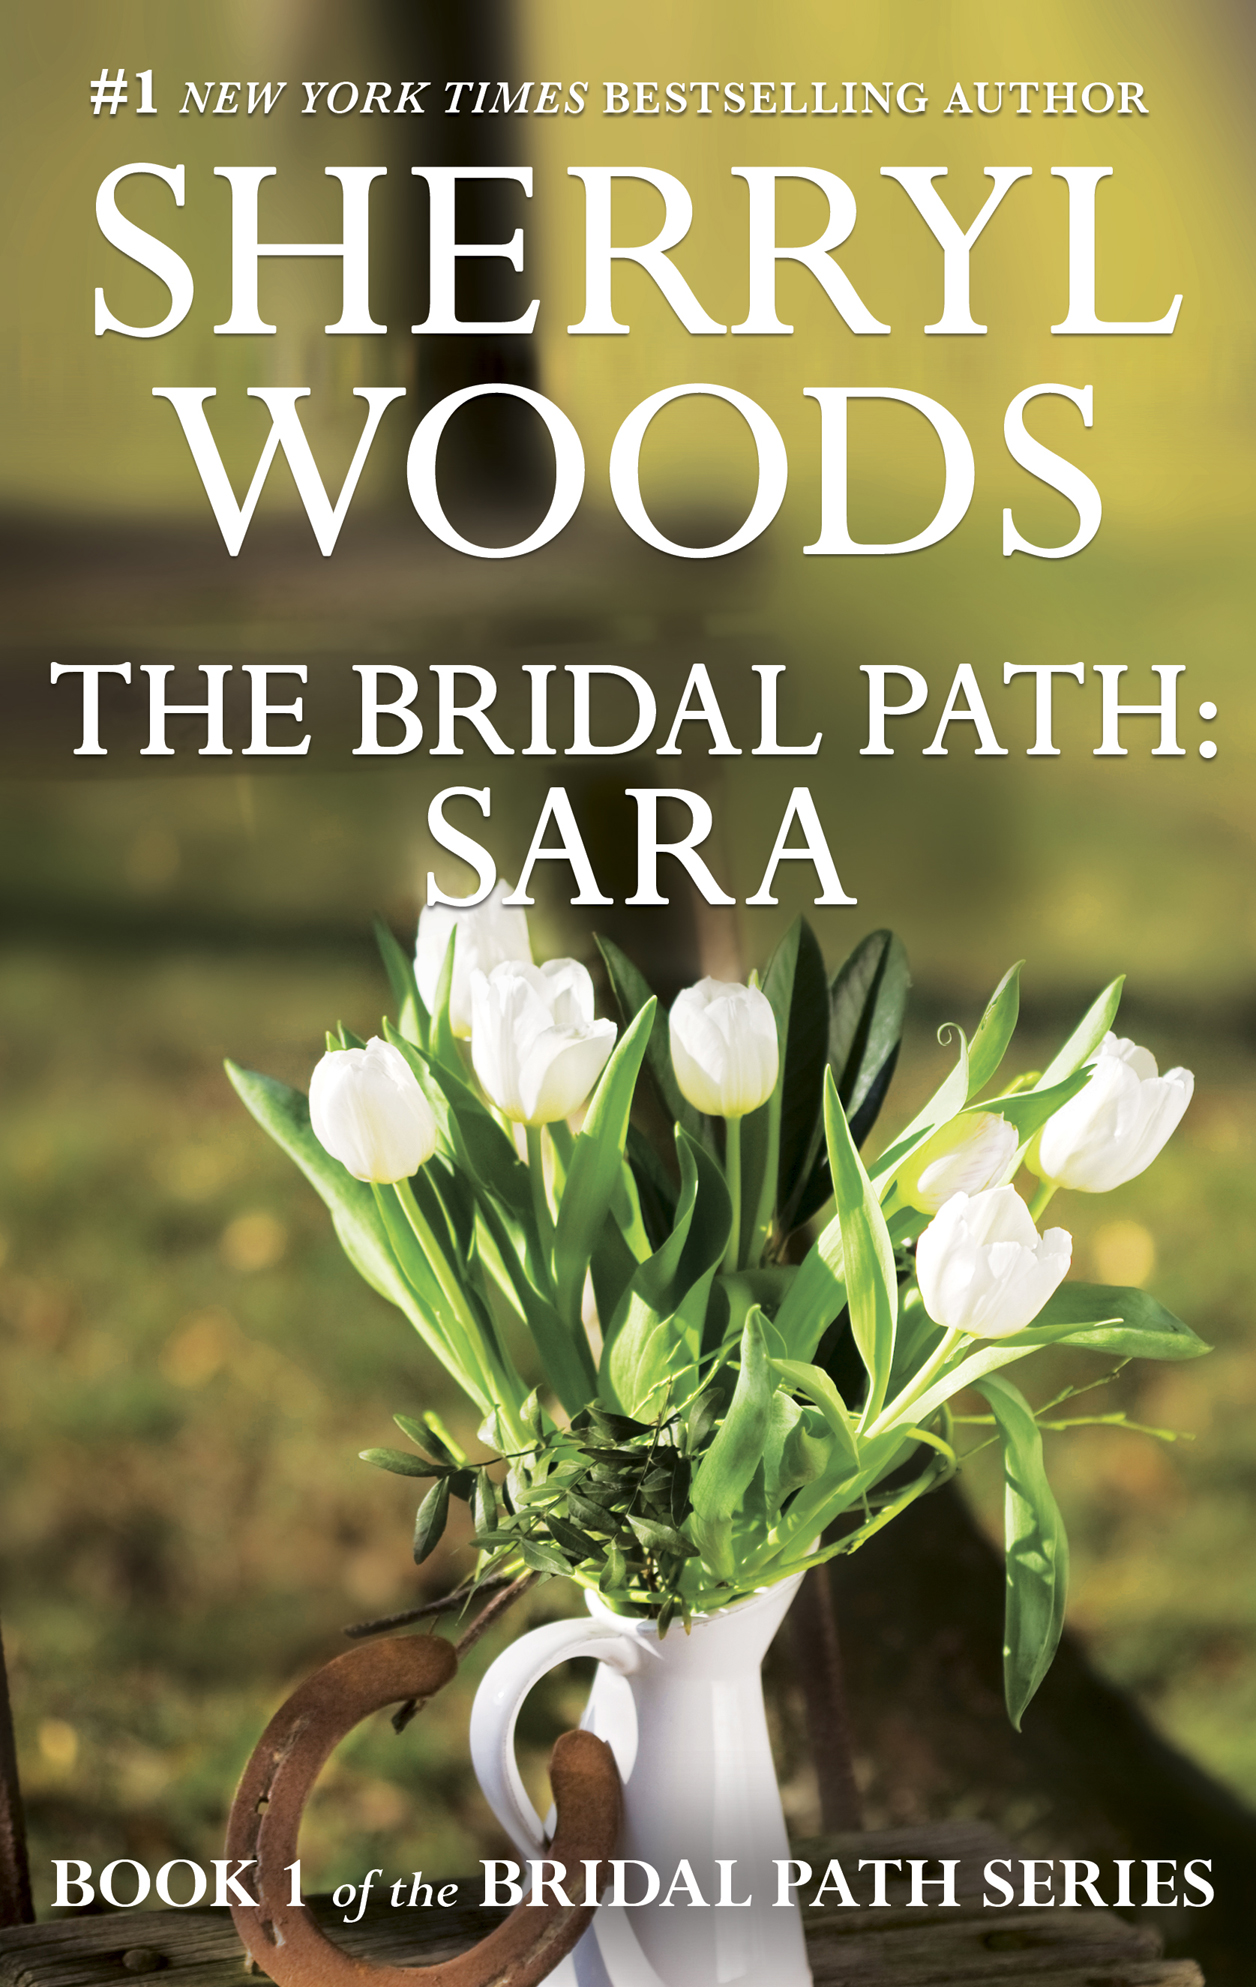 The Bridal Path: Sara (1995) by Sherryl Woods